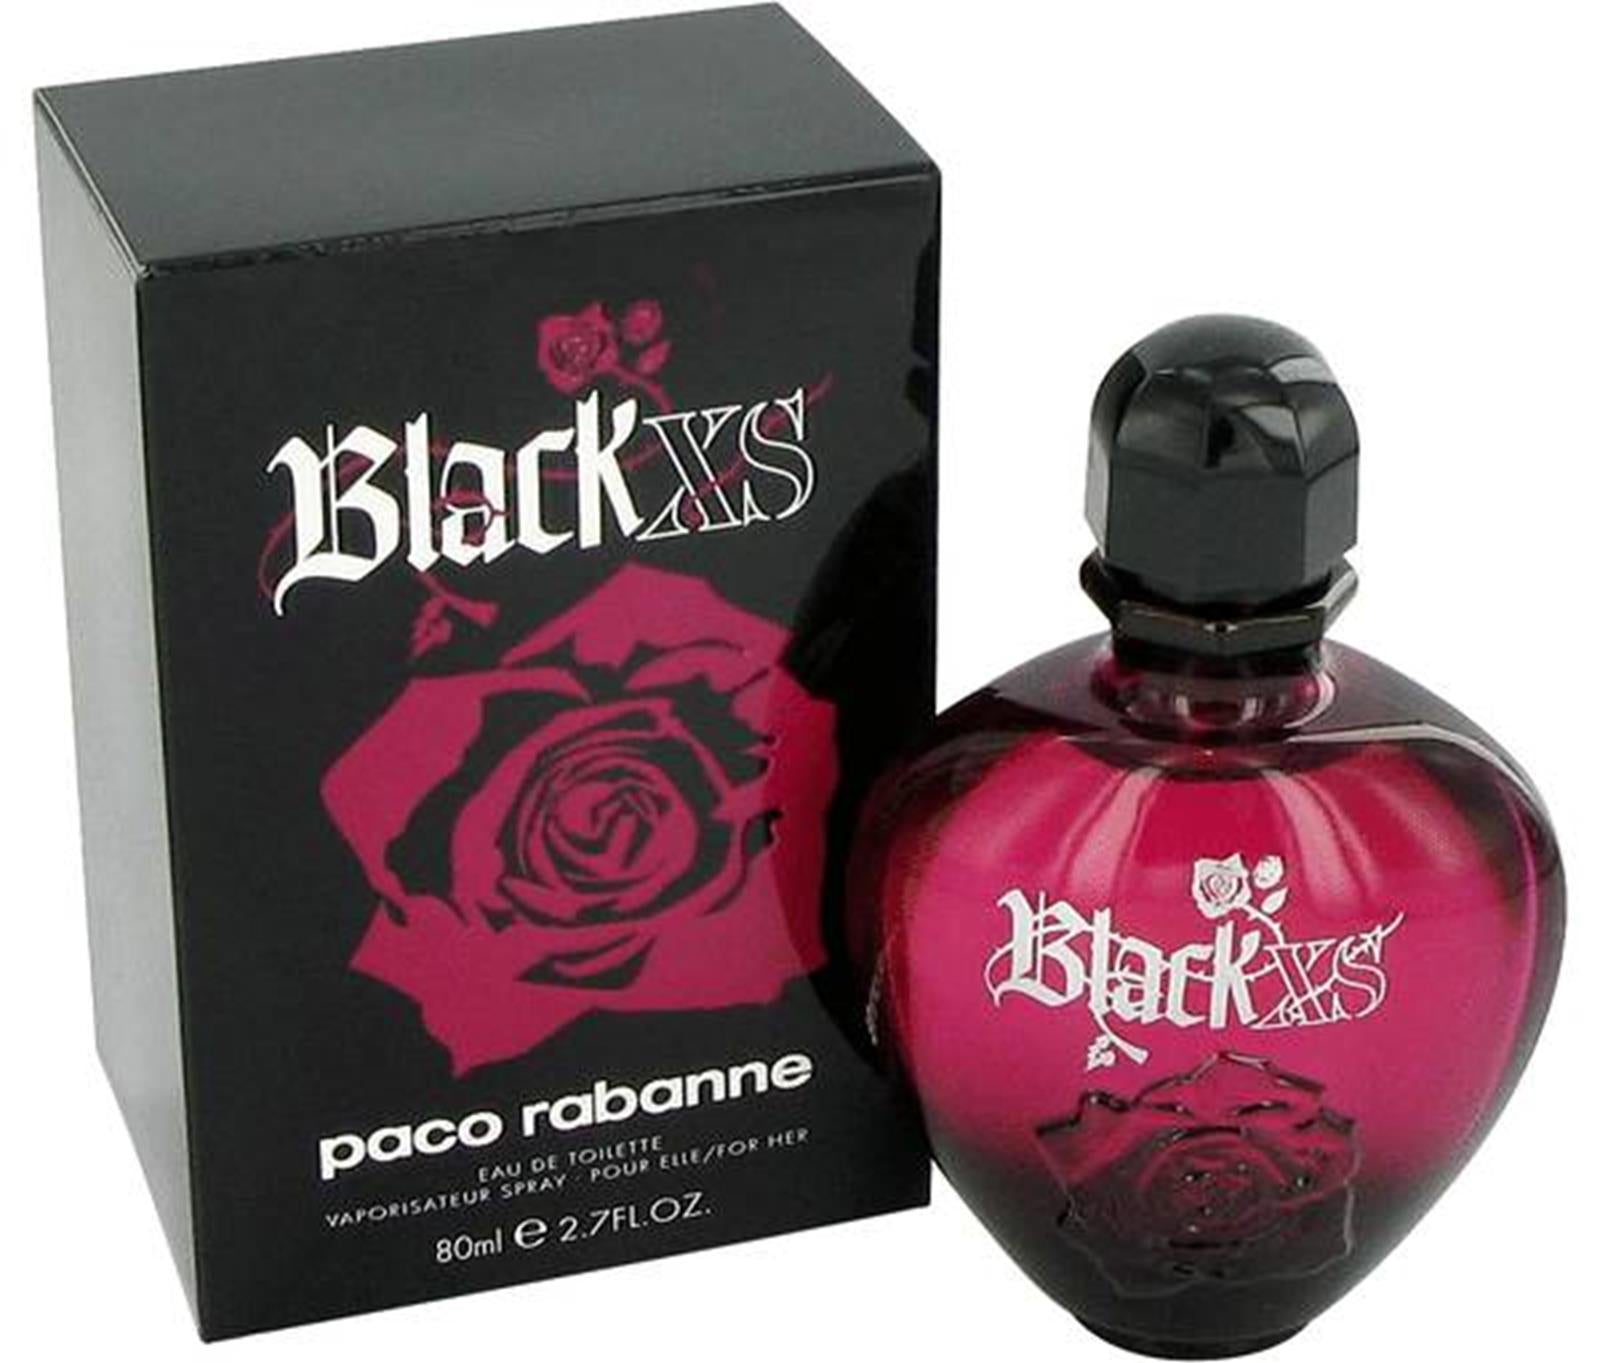 Пако рабан женские купить. Paco Rabanne Black XS. Paco Rabanne Black XS pour femme. Black XS 80 ml. Paco Rabanne Black XS for women.